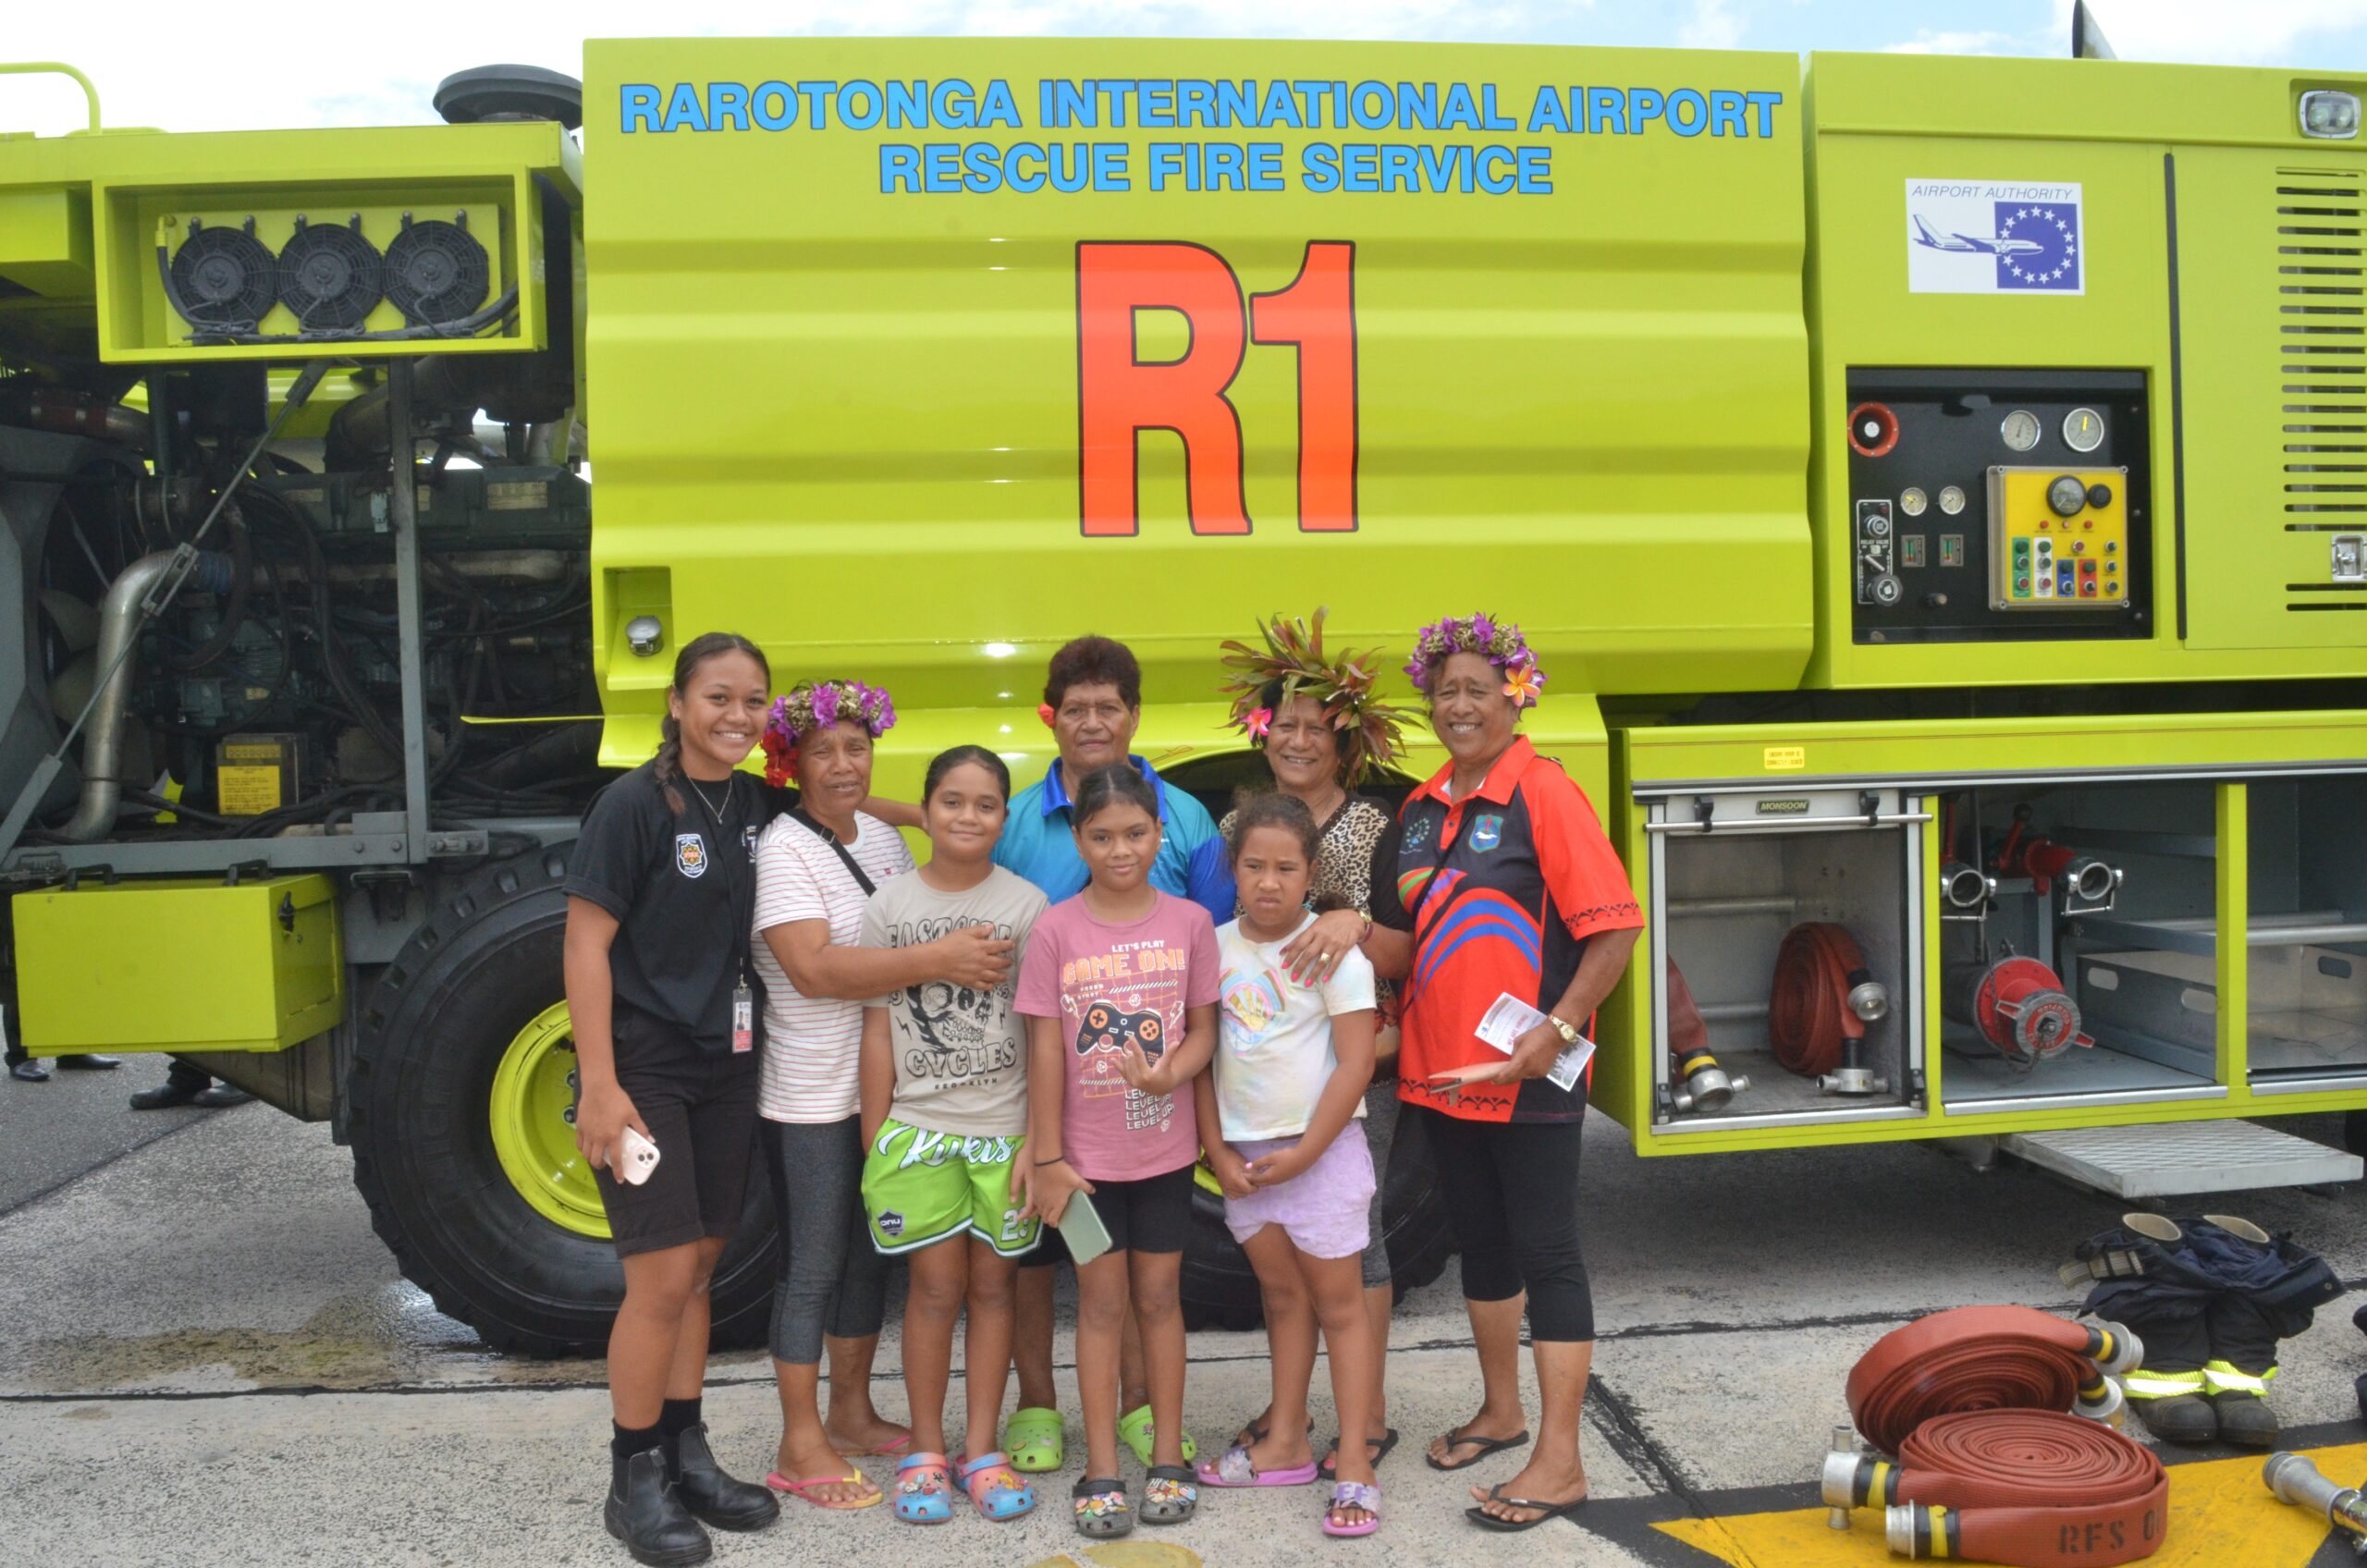 Airport tour offers rare glimpse into Rarotonga’s travel hub